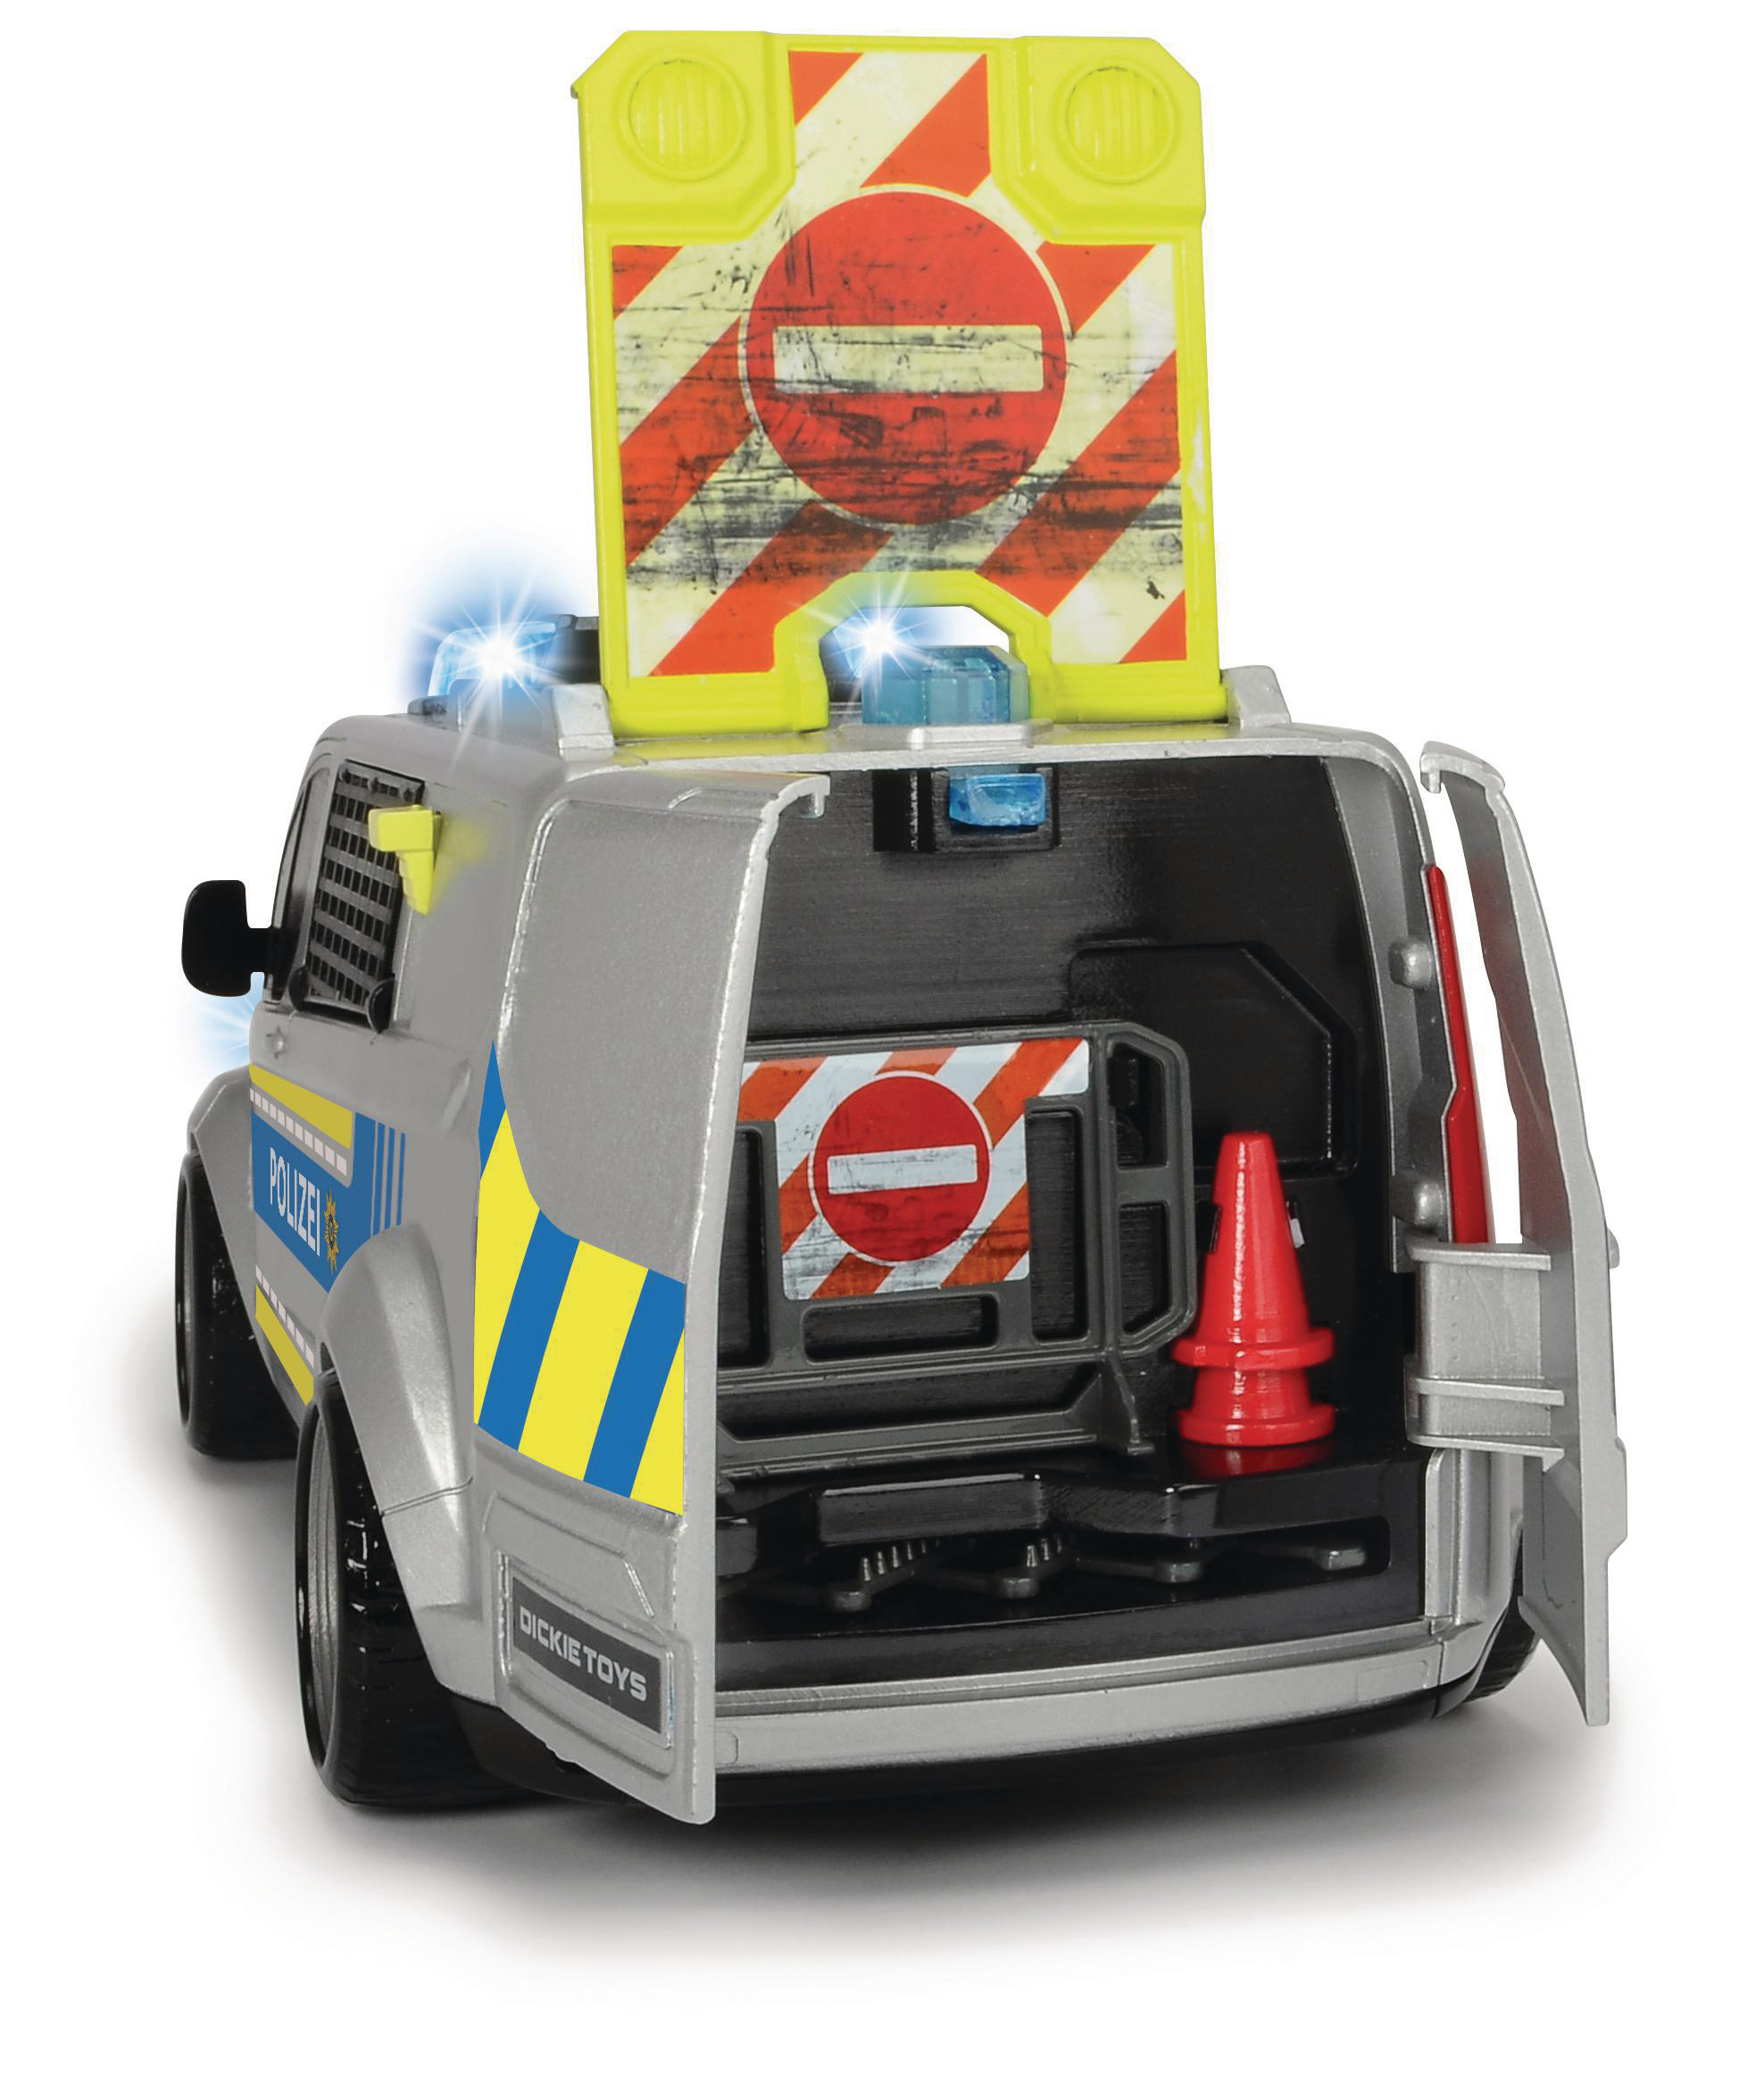 DICKIE-TOYS Ford Transit Polizei, Spielzeugauto Mehrfarbig Polizeibus